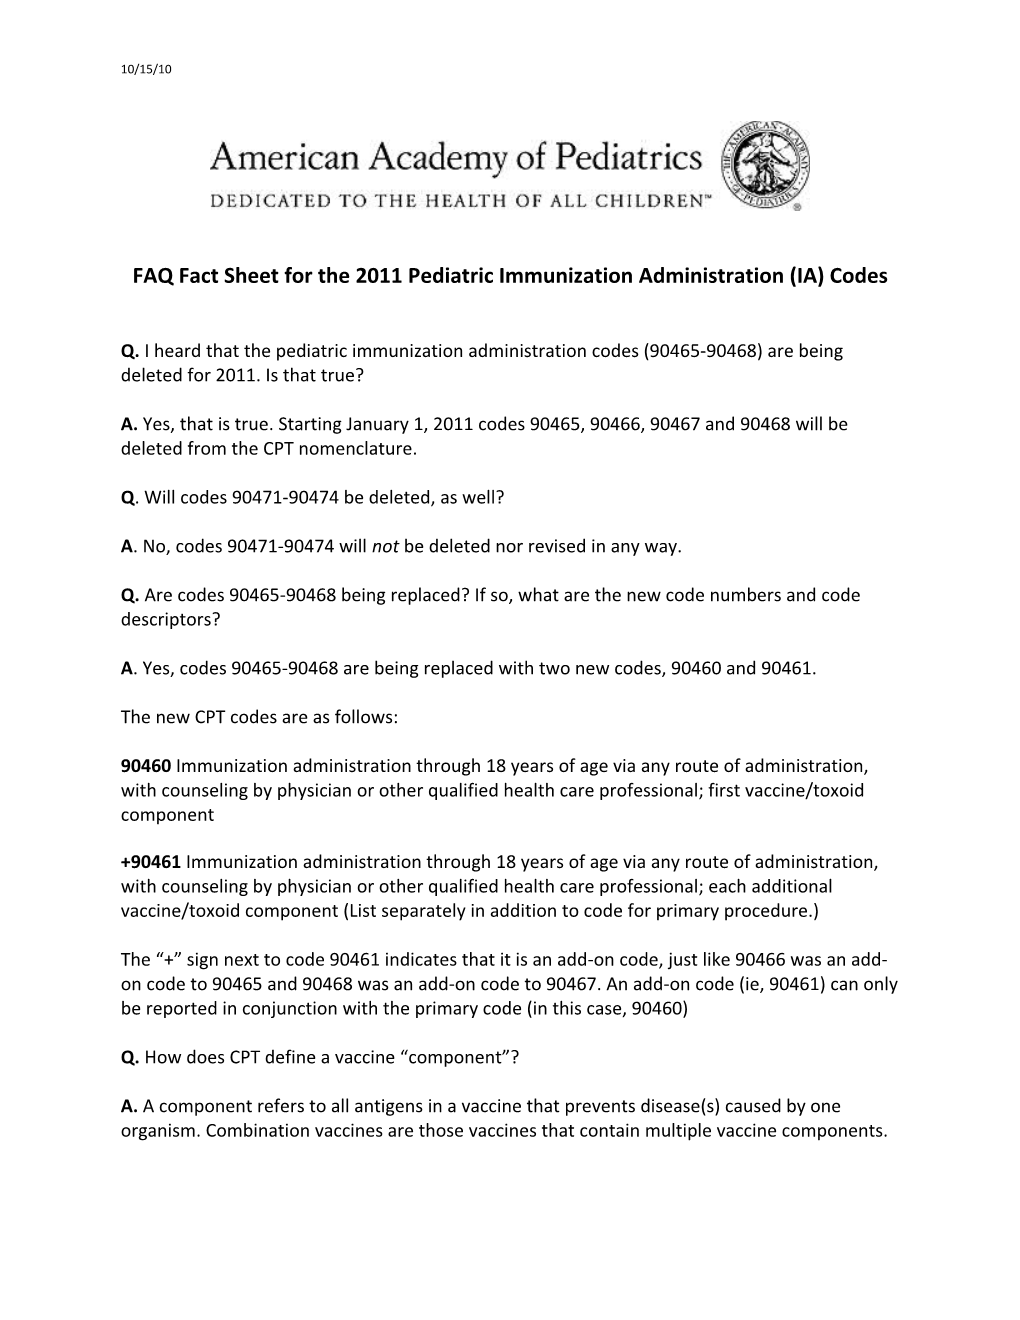 FAQ Fact Sheet for the 2011 Pediatric Immunization Administration (IA) Codes